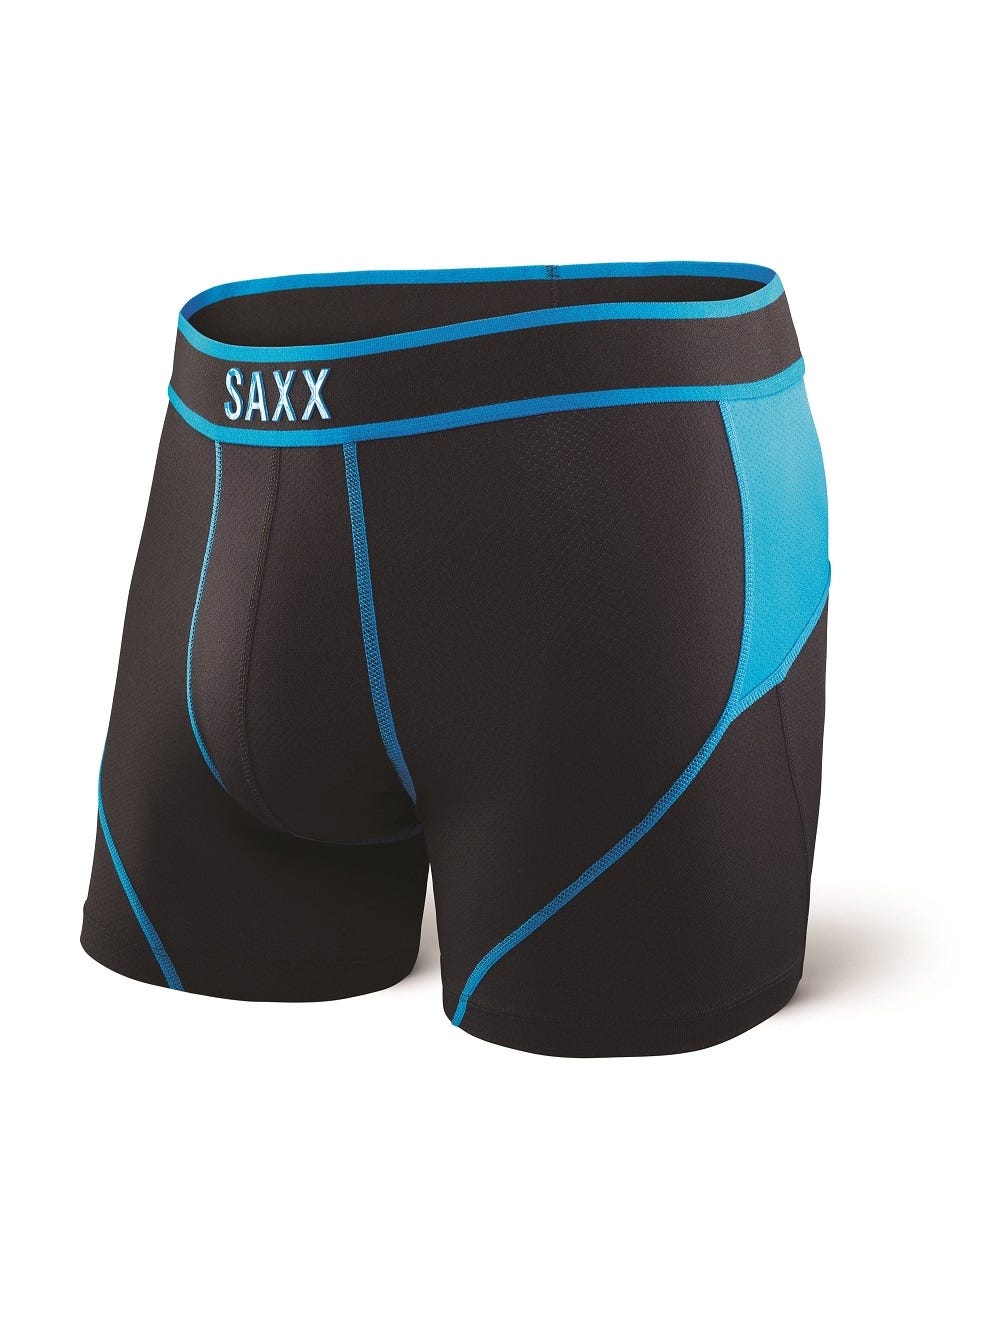 Saxx boxer kinetic energy sxbb27-bel